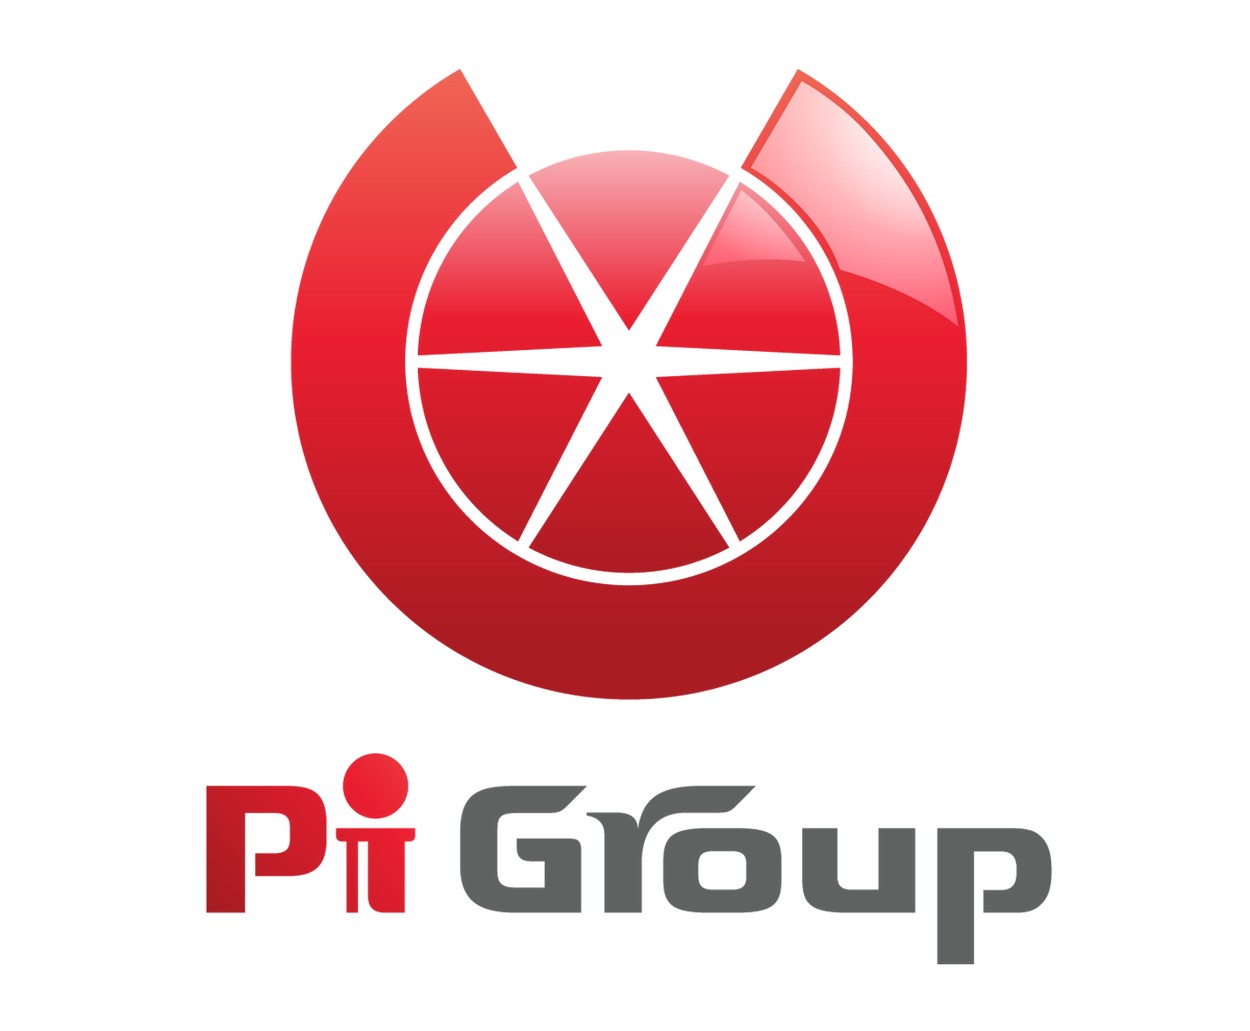 Logo chủ đầu tư Picity Sky Park Dĩ An - Pi Group